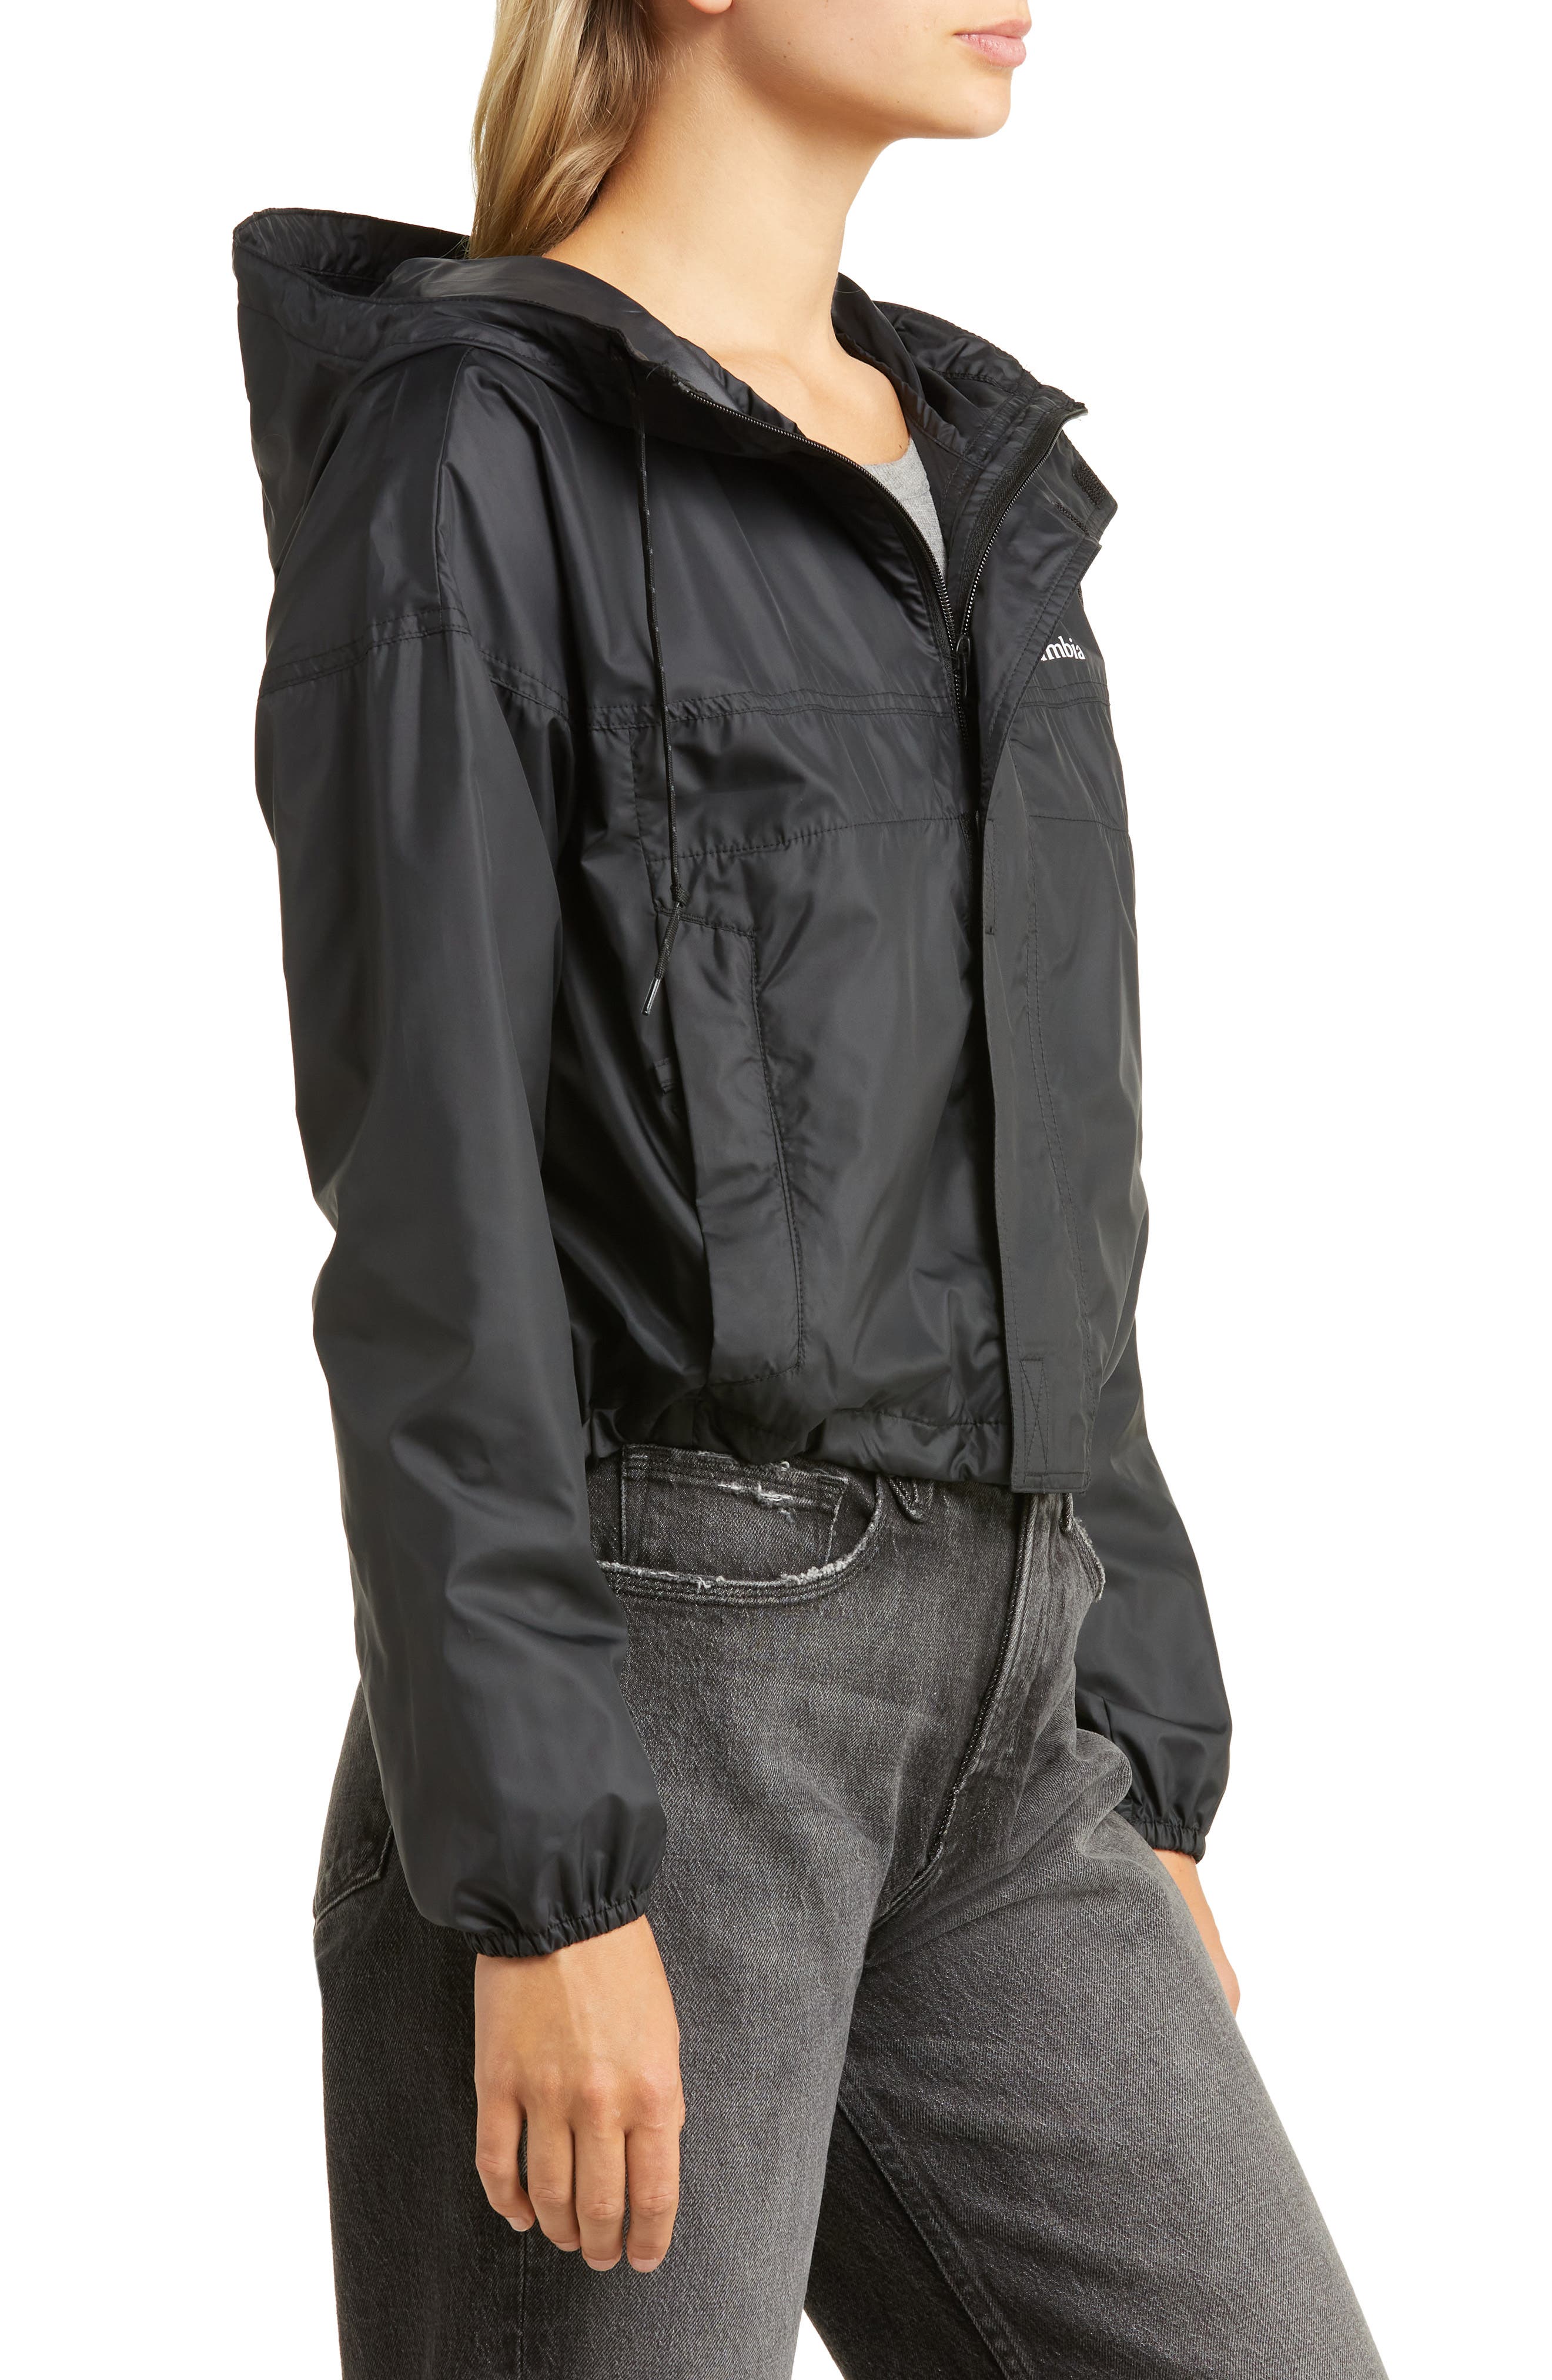 Columbia Flash Challenger cropped windbreaker jacket in black